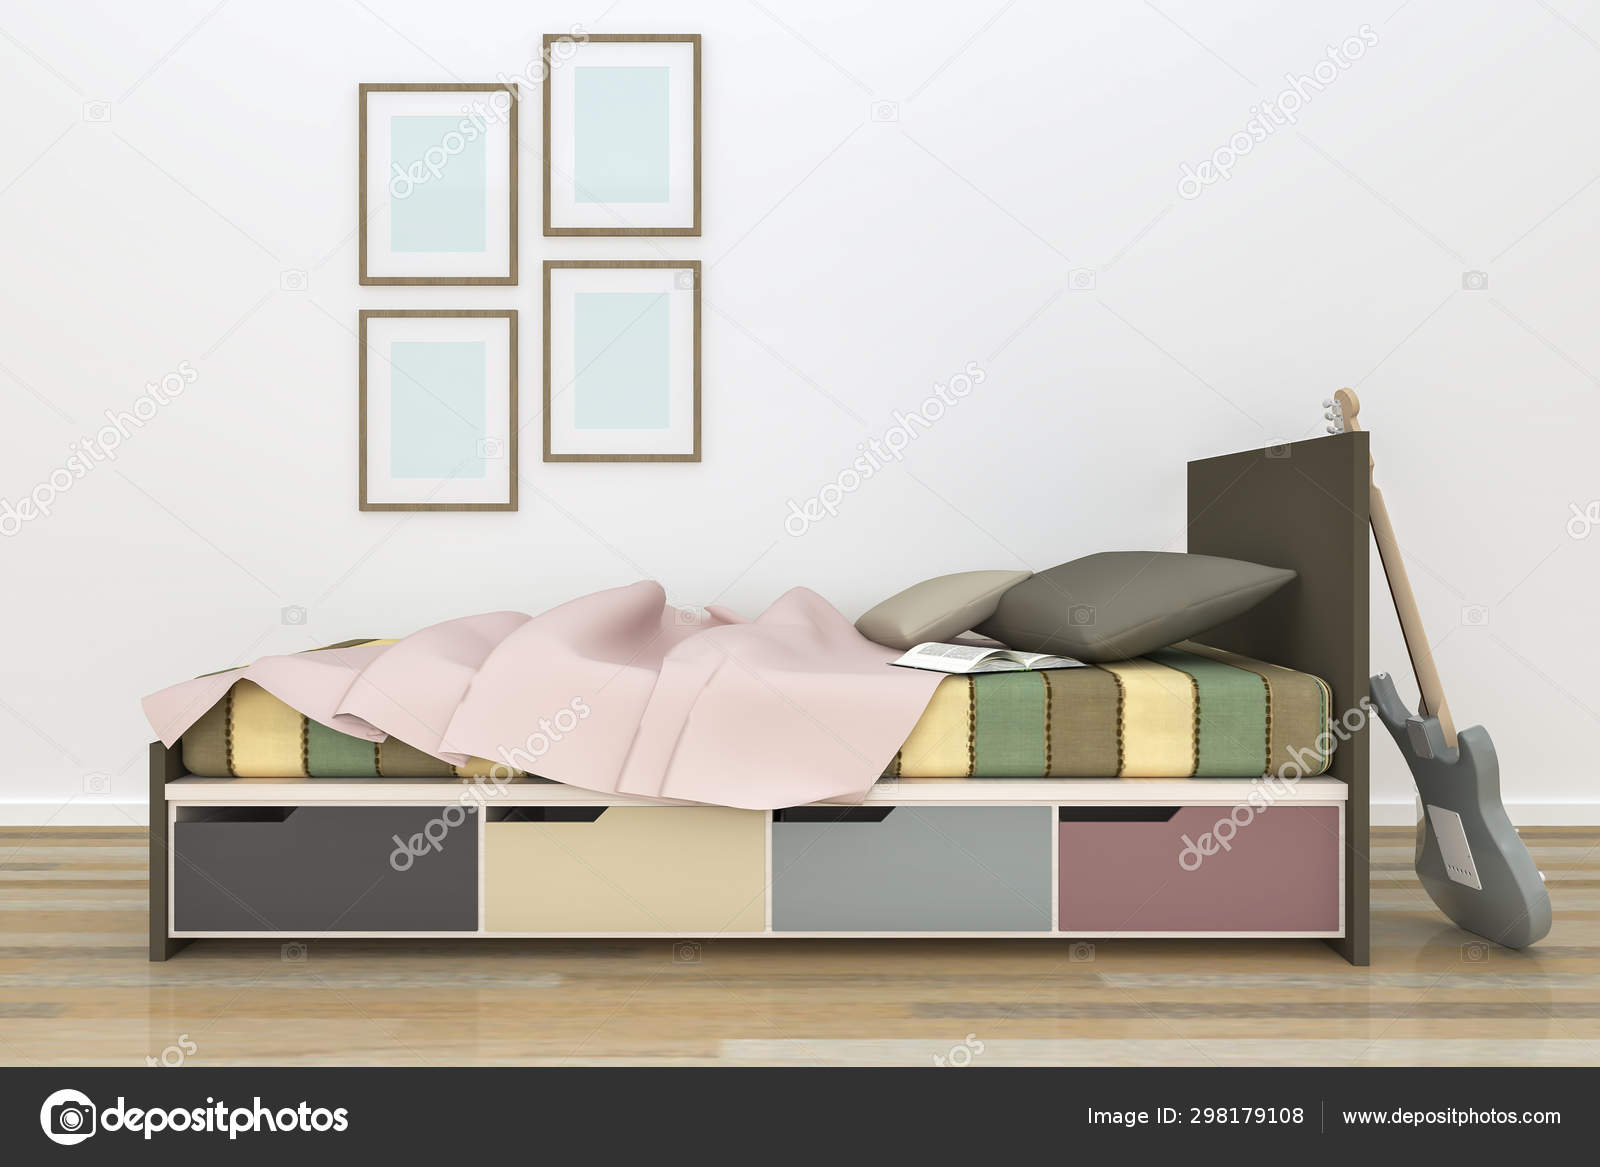 Realistic Rendering Modern Kids Bedroom, Kid Bed Frame With Drawers